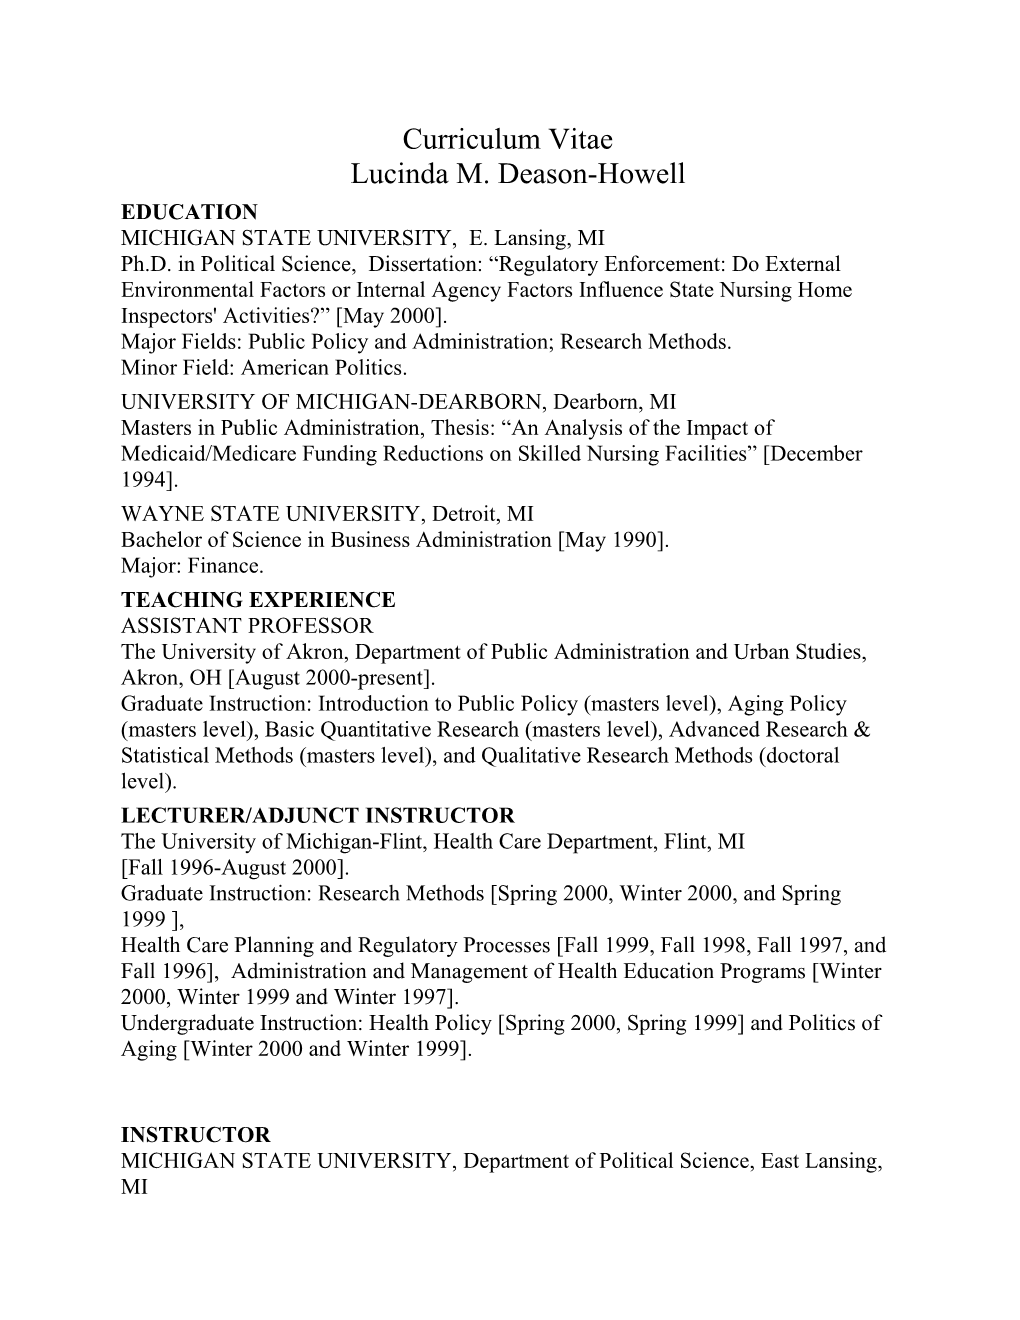 Curriculum Vitae Lucinda M. Deason-Howell